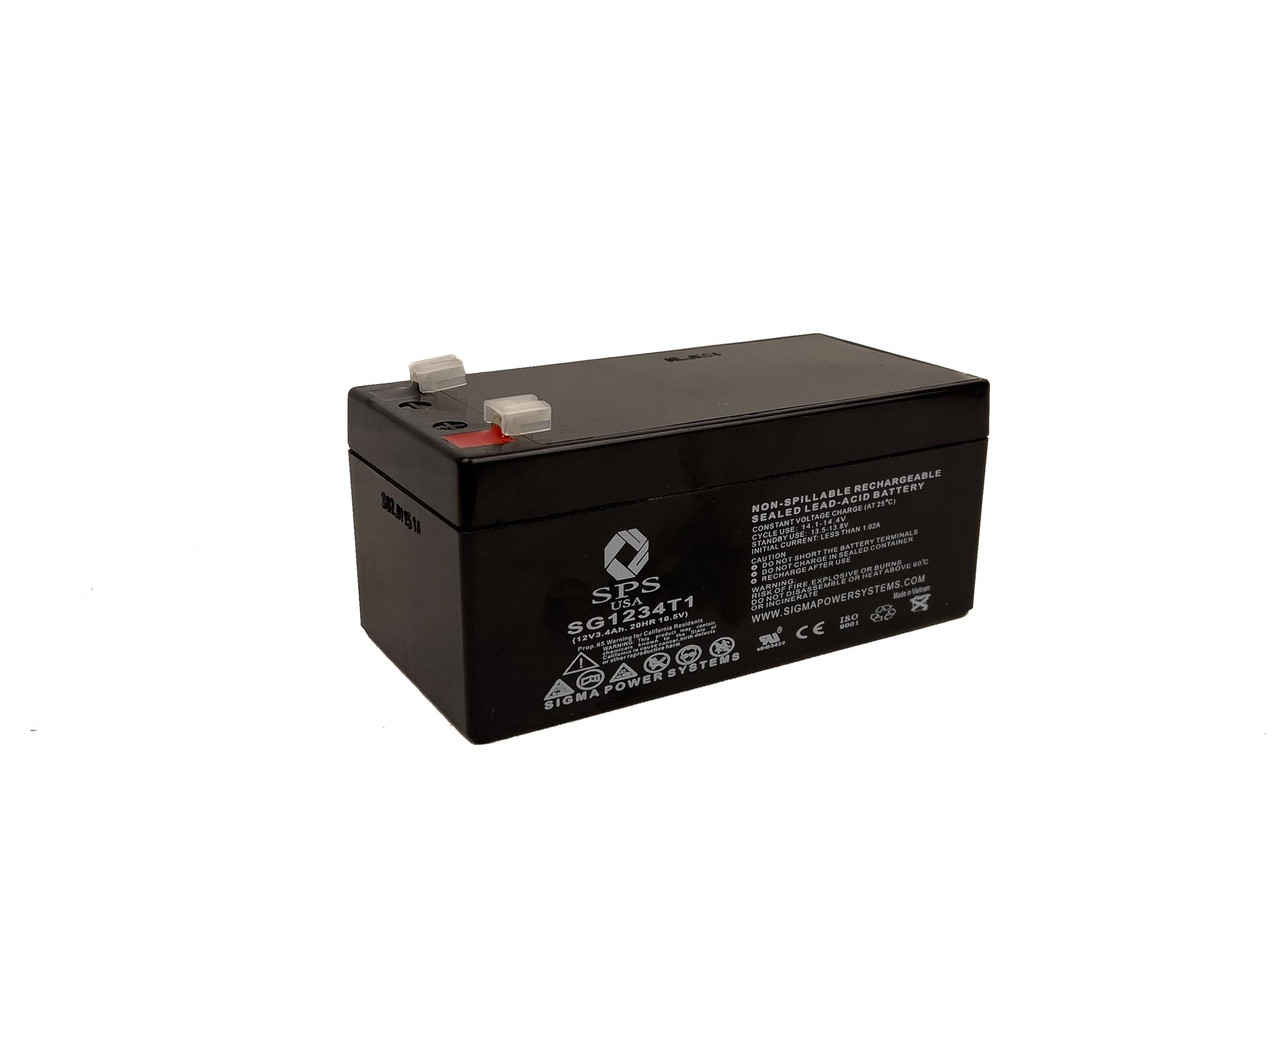 Raion Power 12V 3.4Ah Non-Spillable Replacement Battery for Dewalt 244523-00 Lawn Mower